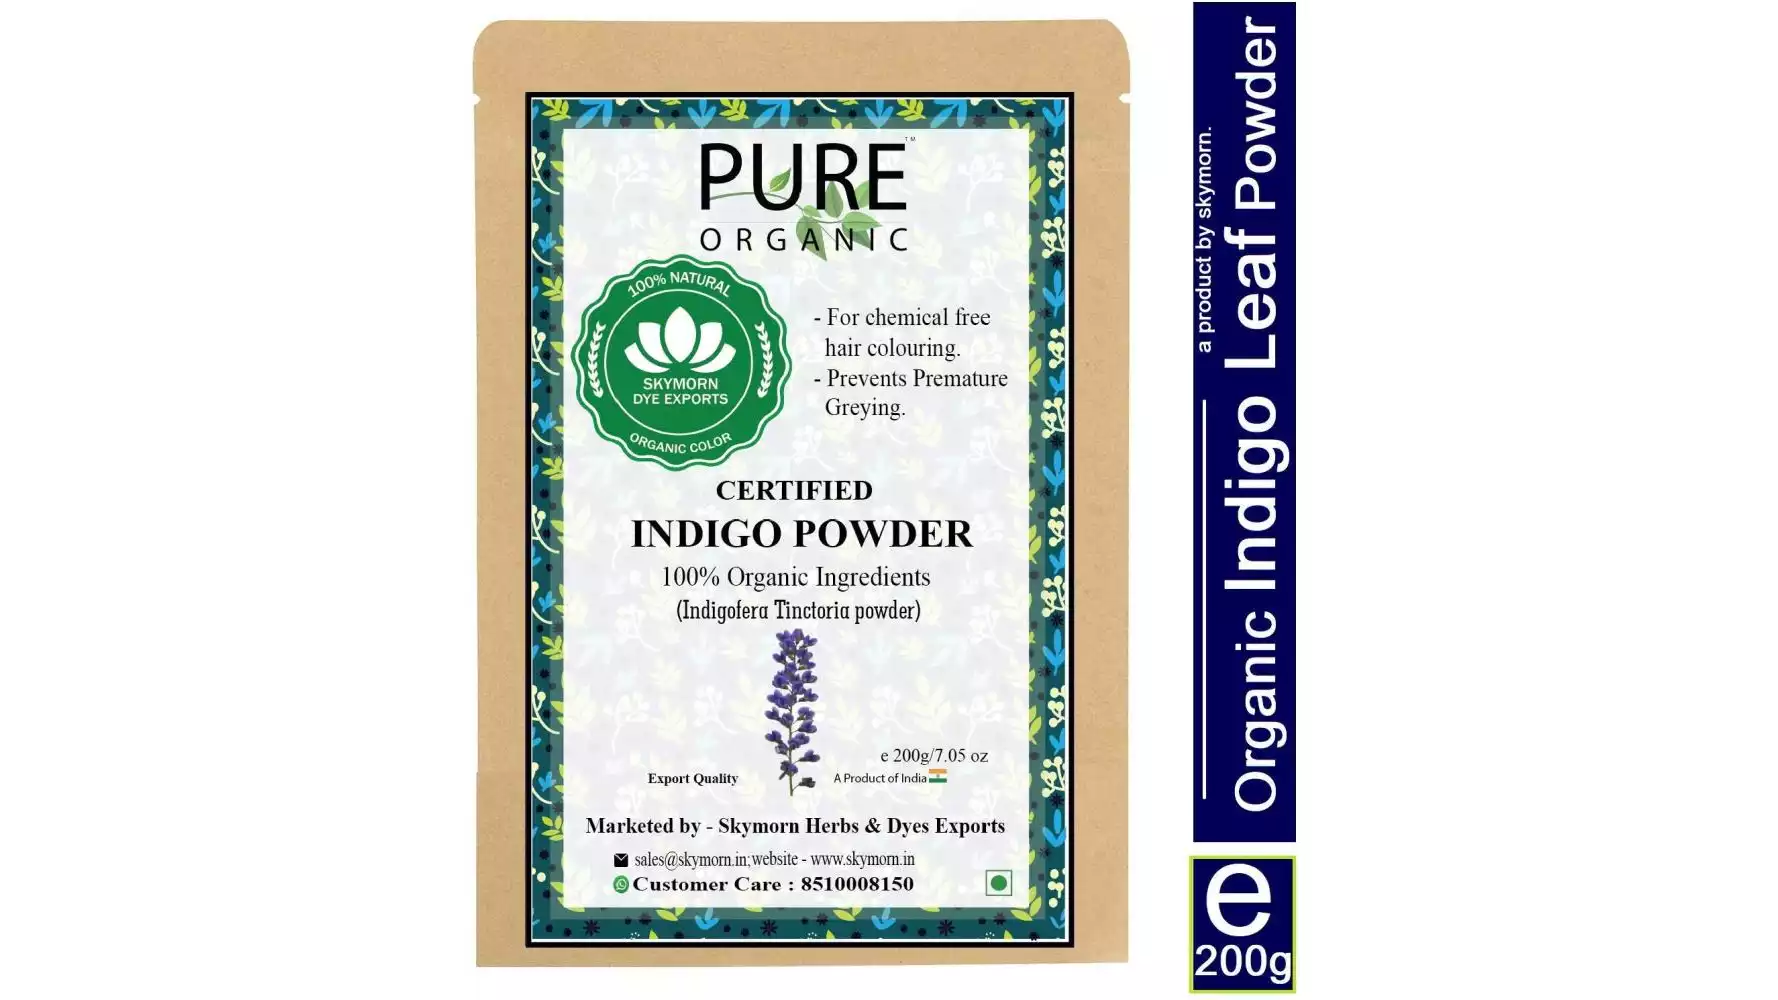 SkyMorn Pure Organic Natural Indigo Leaf Powder Hair Colour (100g, Pack of 2)